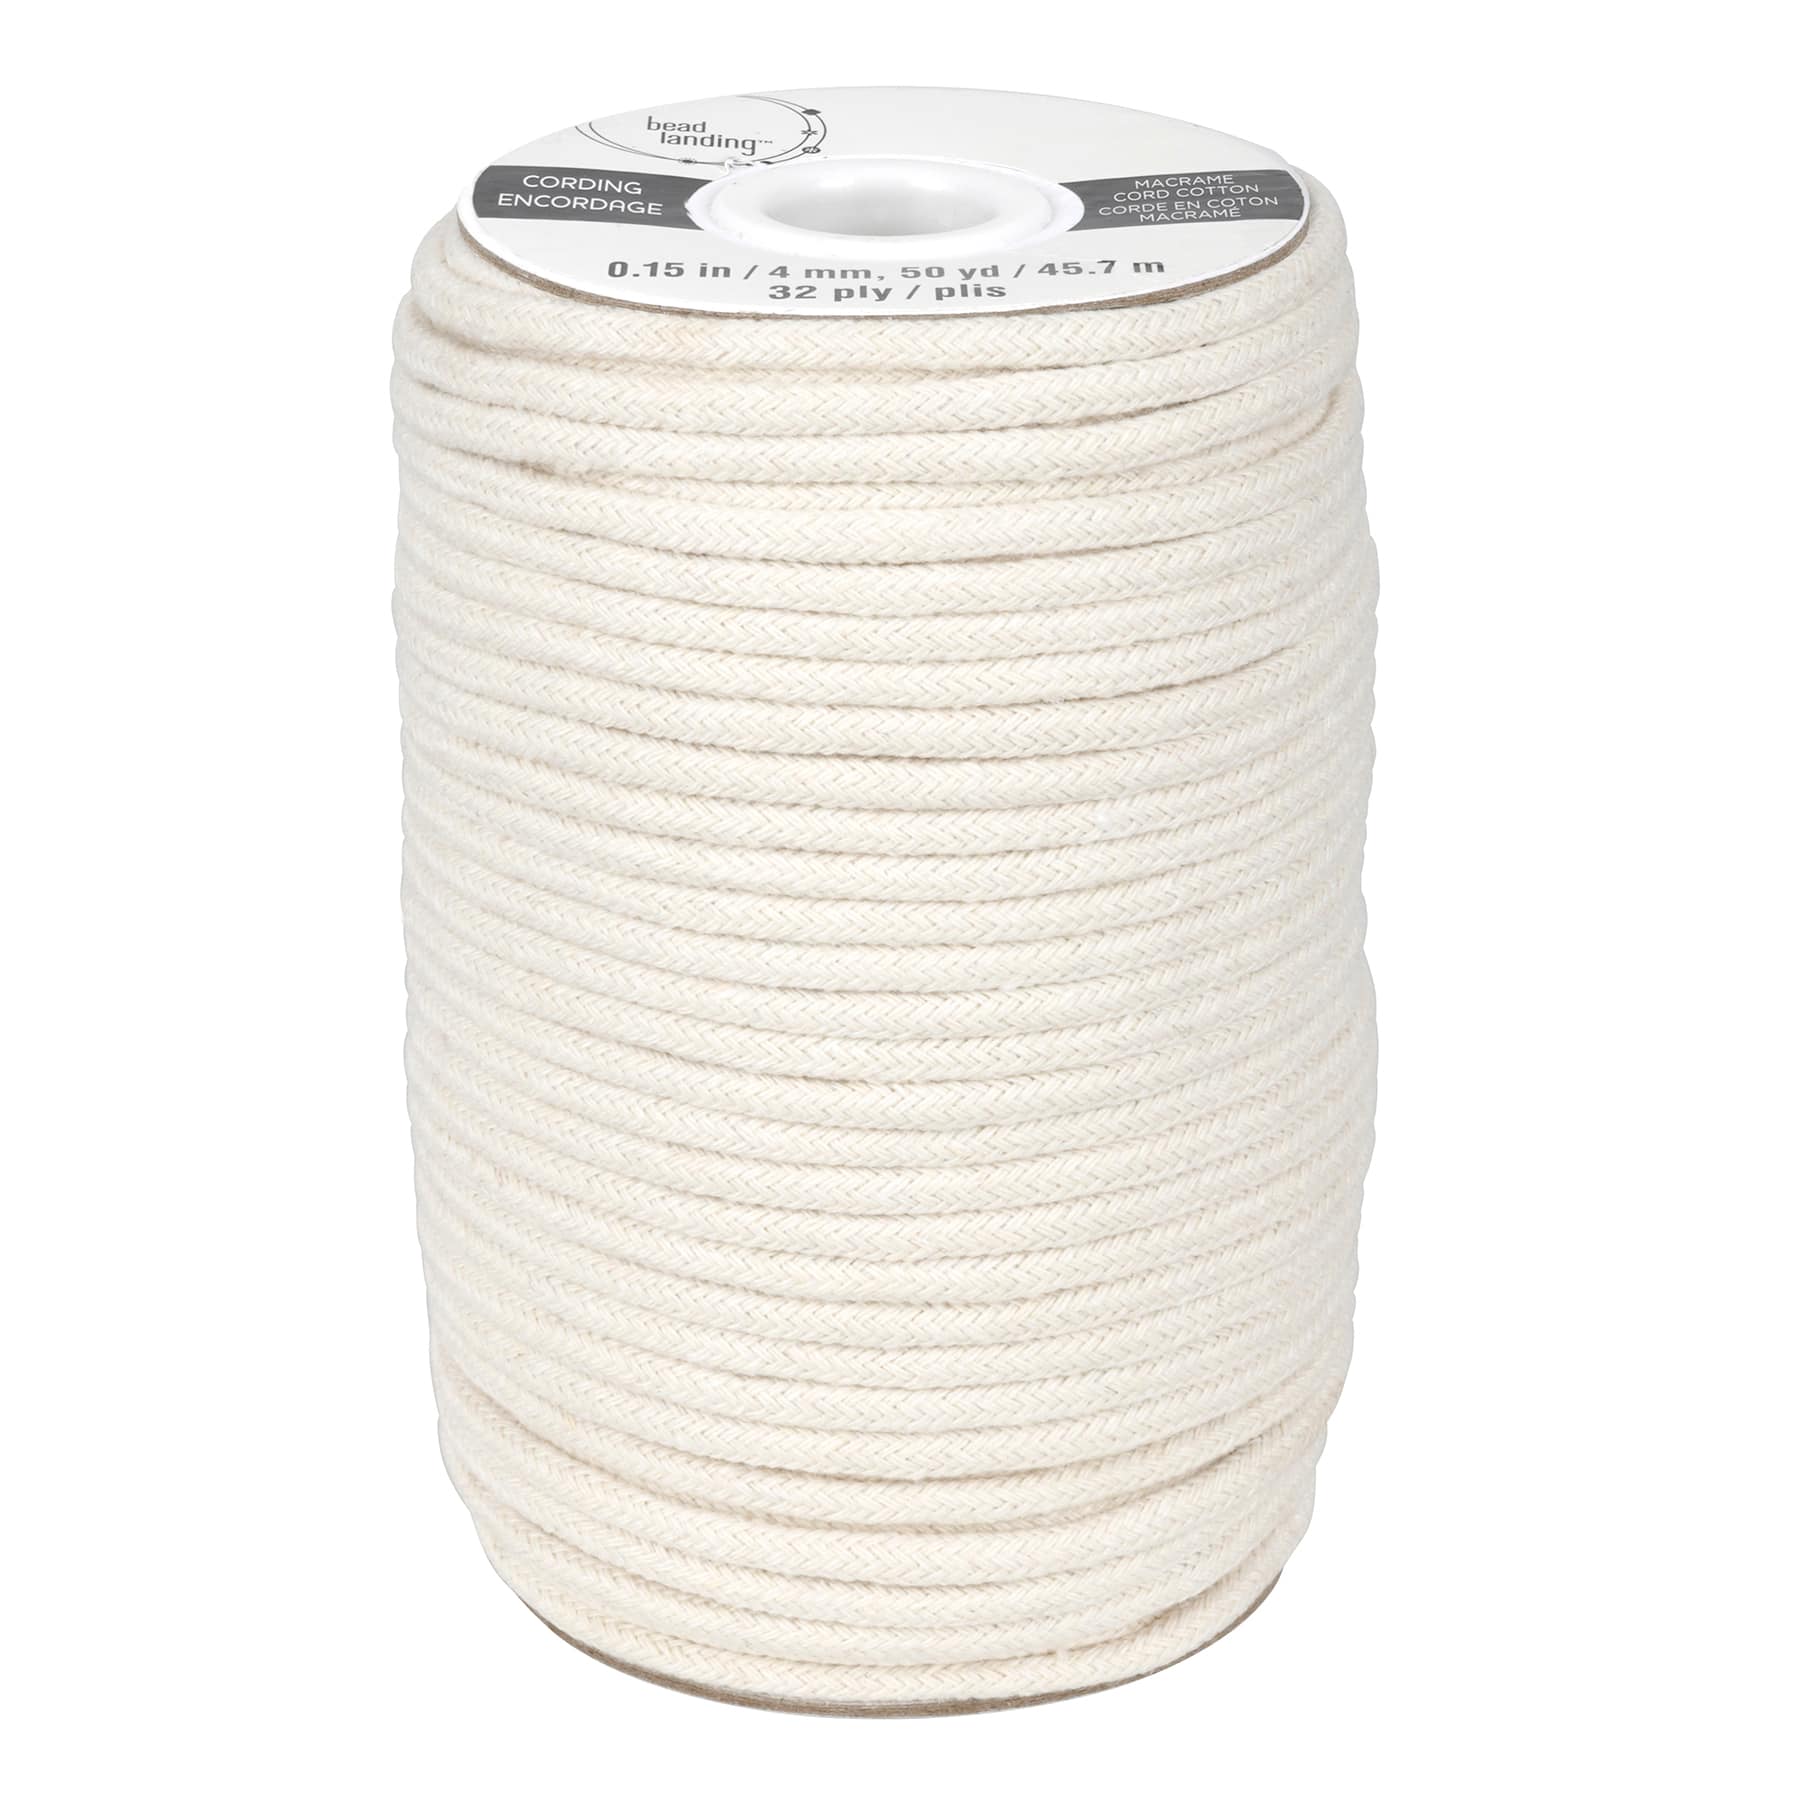 Darice 3mm Craft Designer Cotton Macrame Cord - each